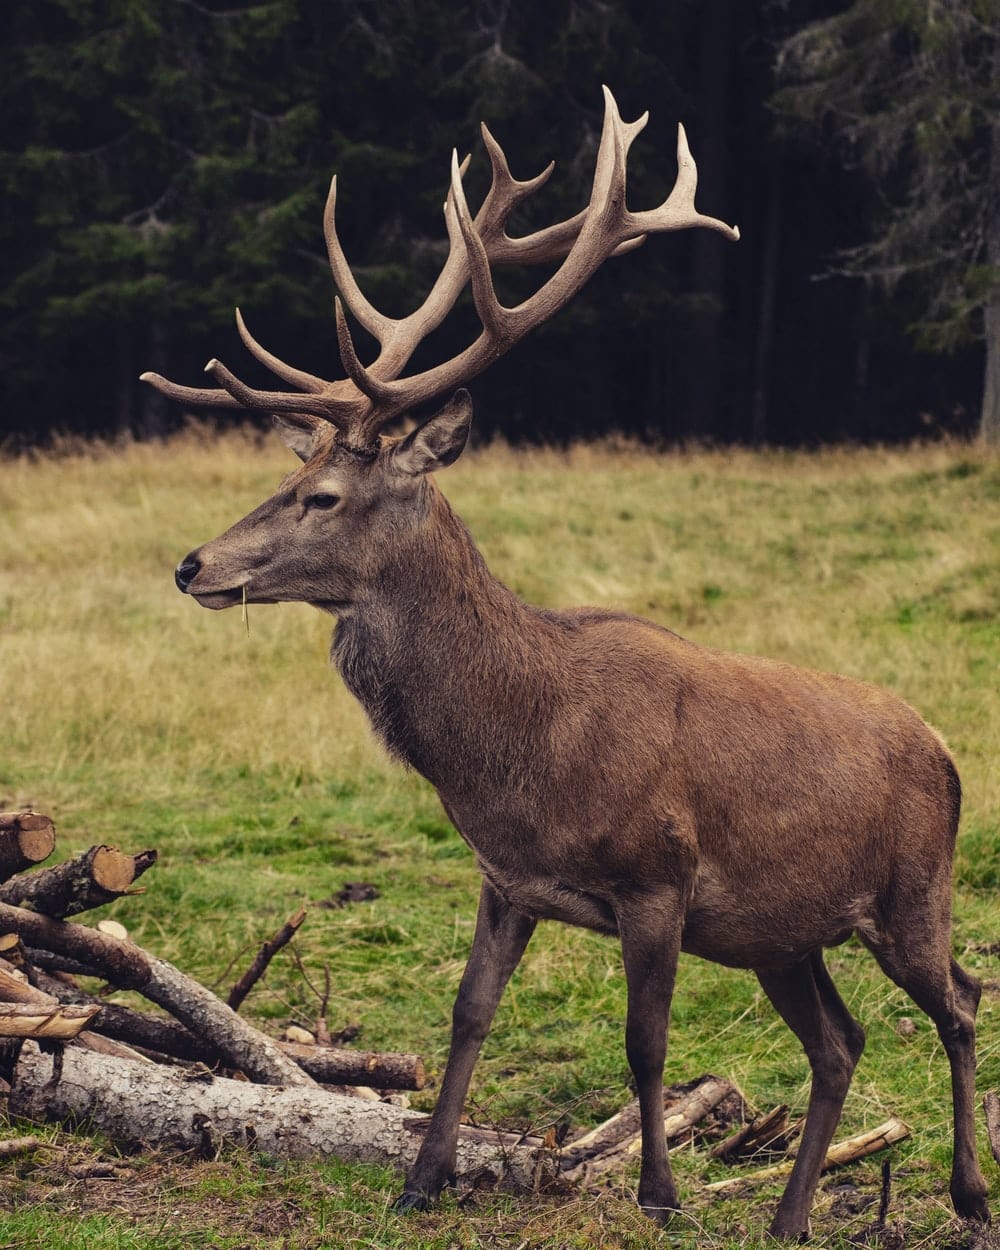 Cross Stitch | Deer - Brown Deer On Green Grass Field During Daytime - Cross Stitched